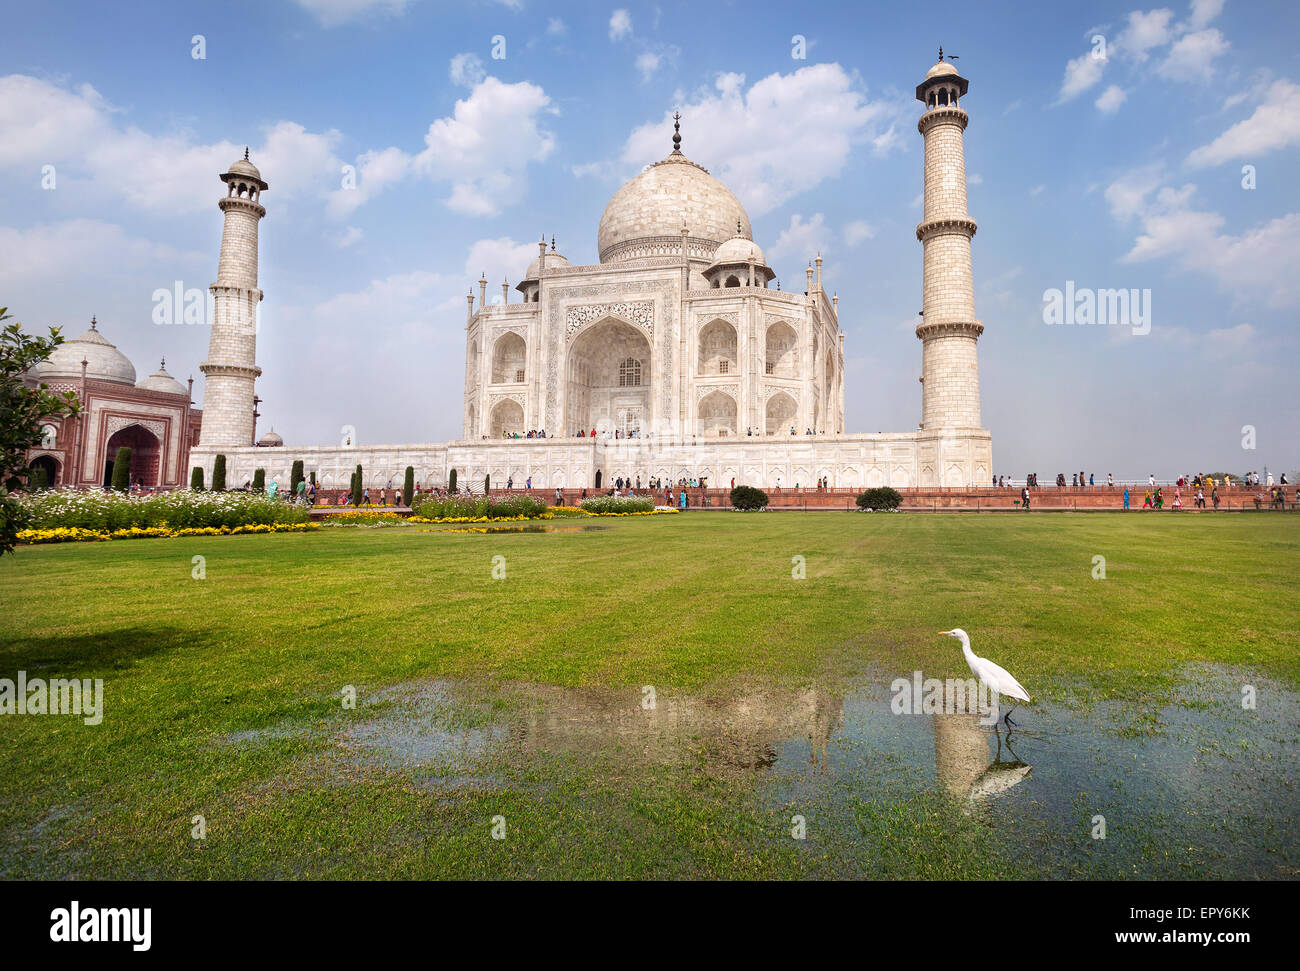 White heron on the grass at Taj Mahal background in Agra, Uttar Pradesh, India Stock Photo